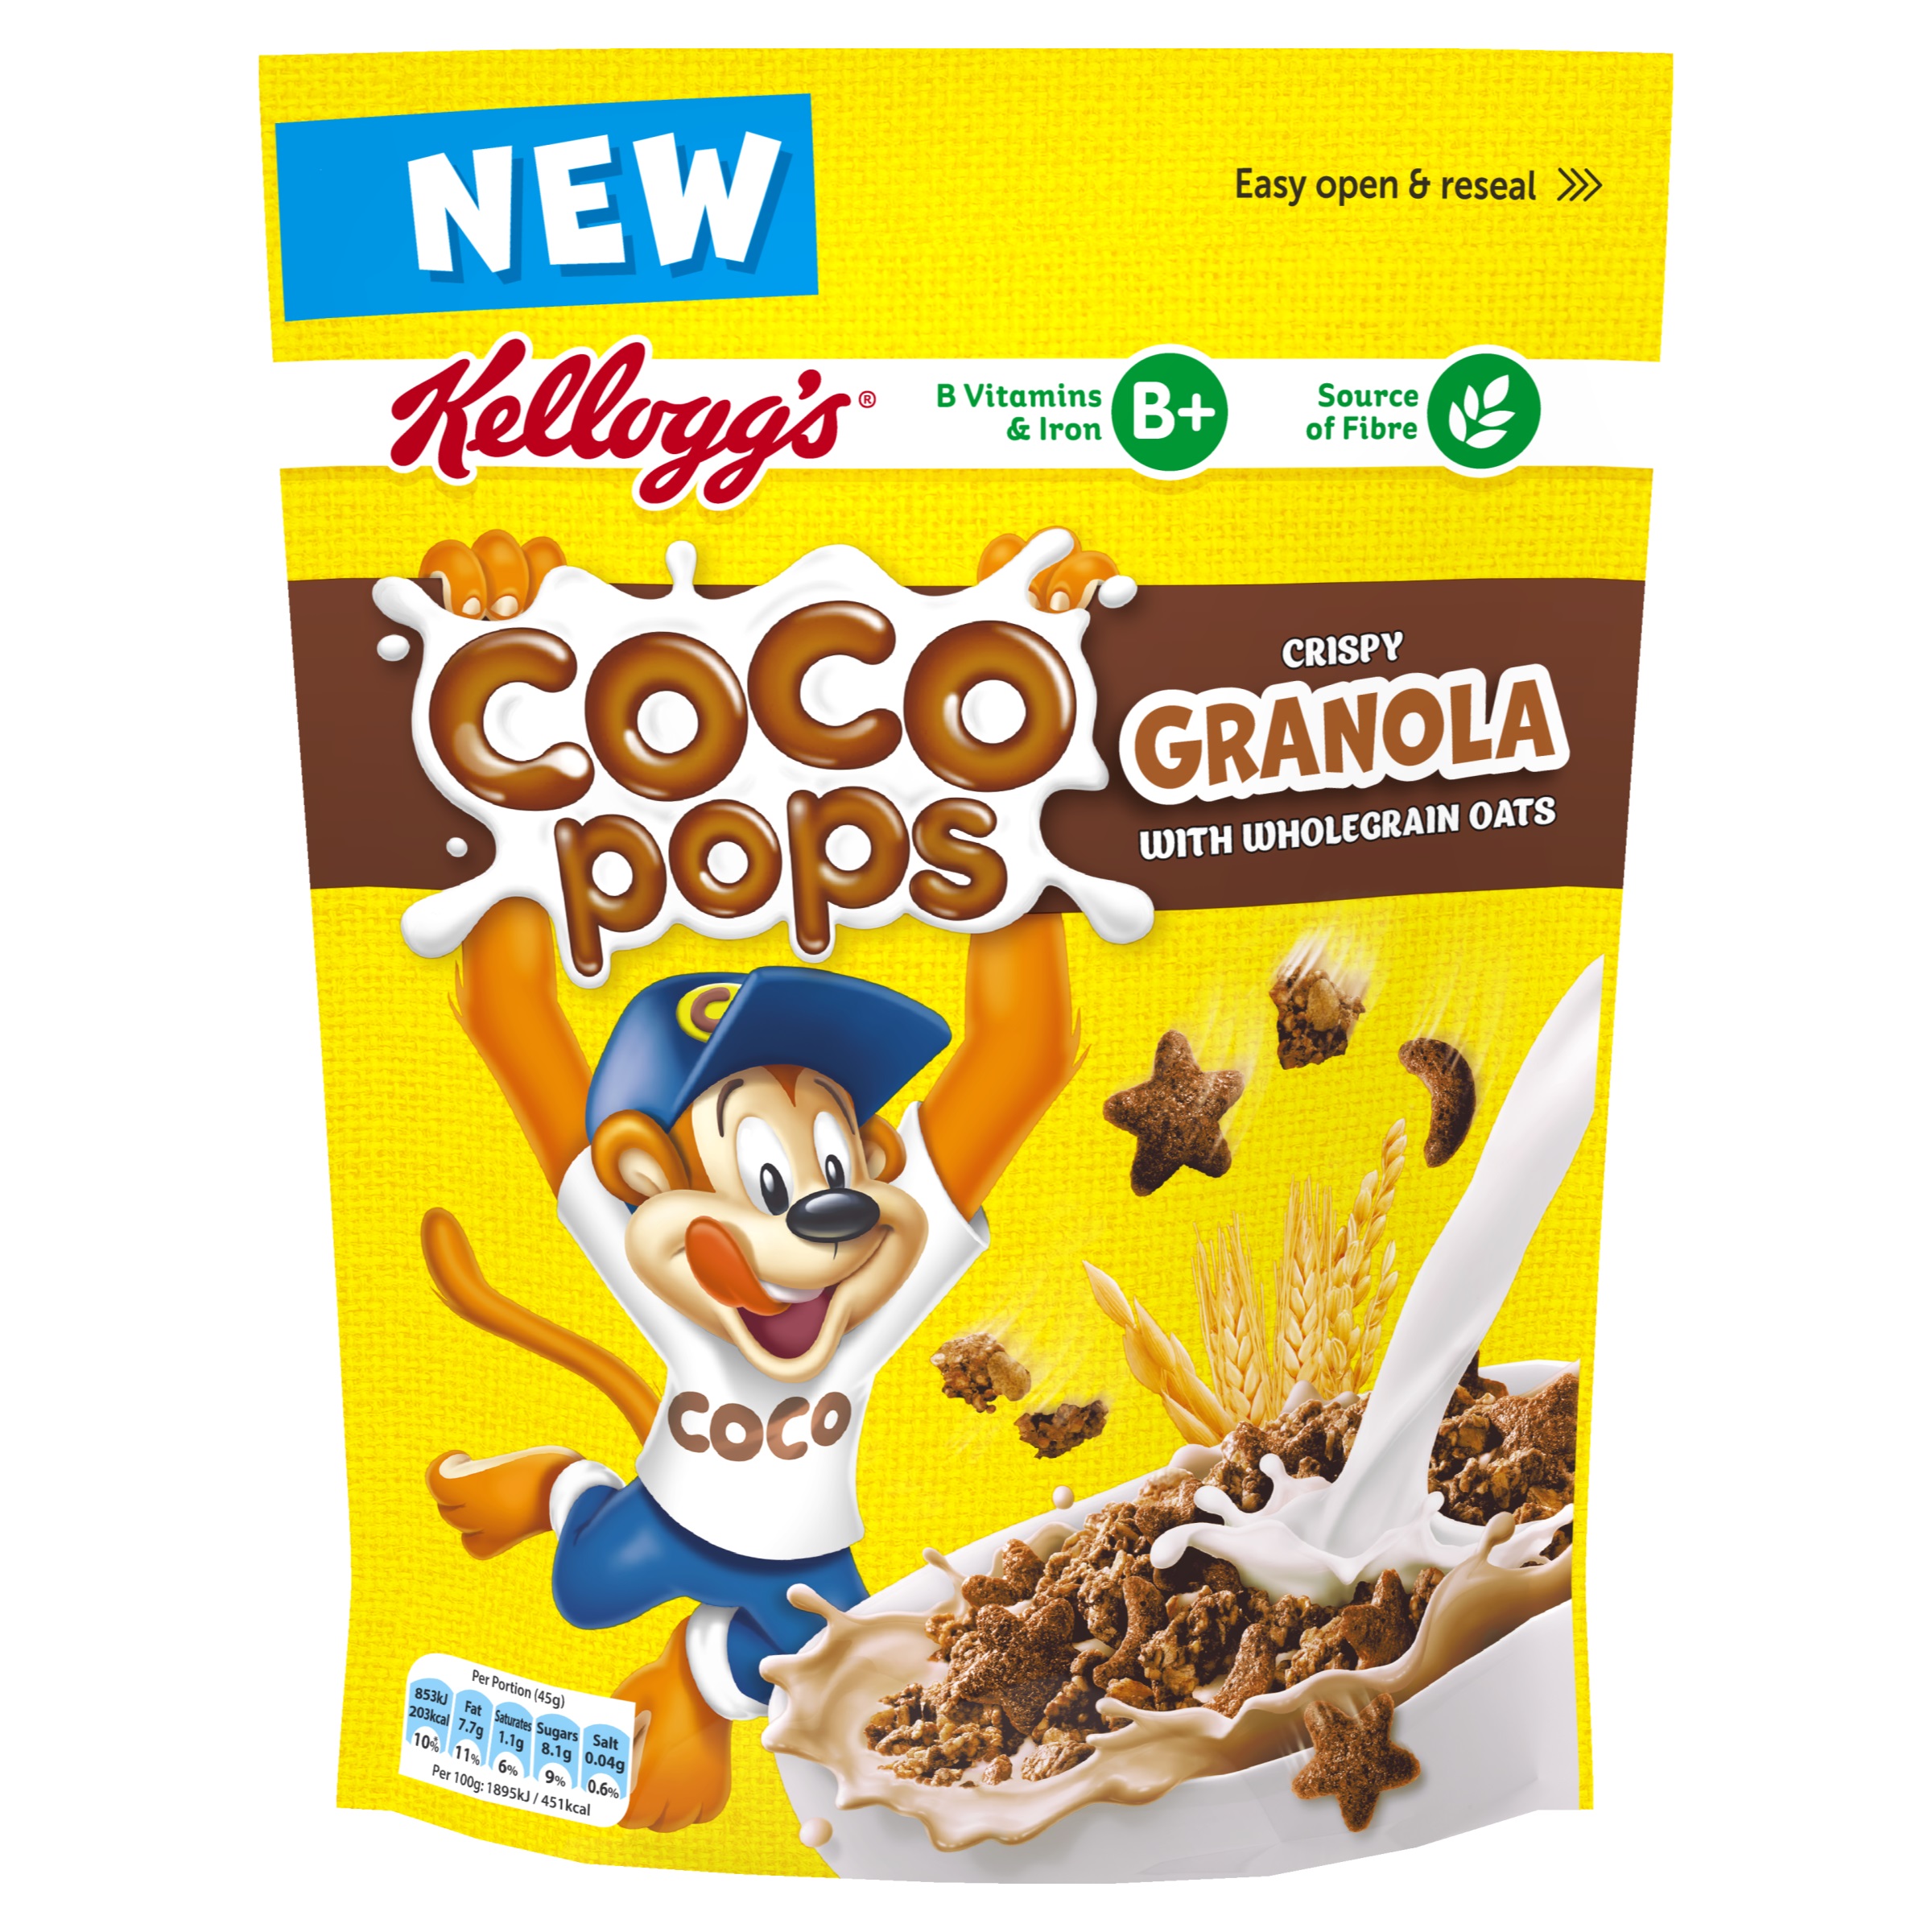 Kritisk Bourgeon Våd Kellogg's launches Coco Pops Granola